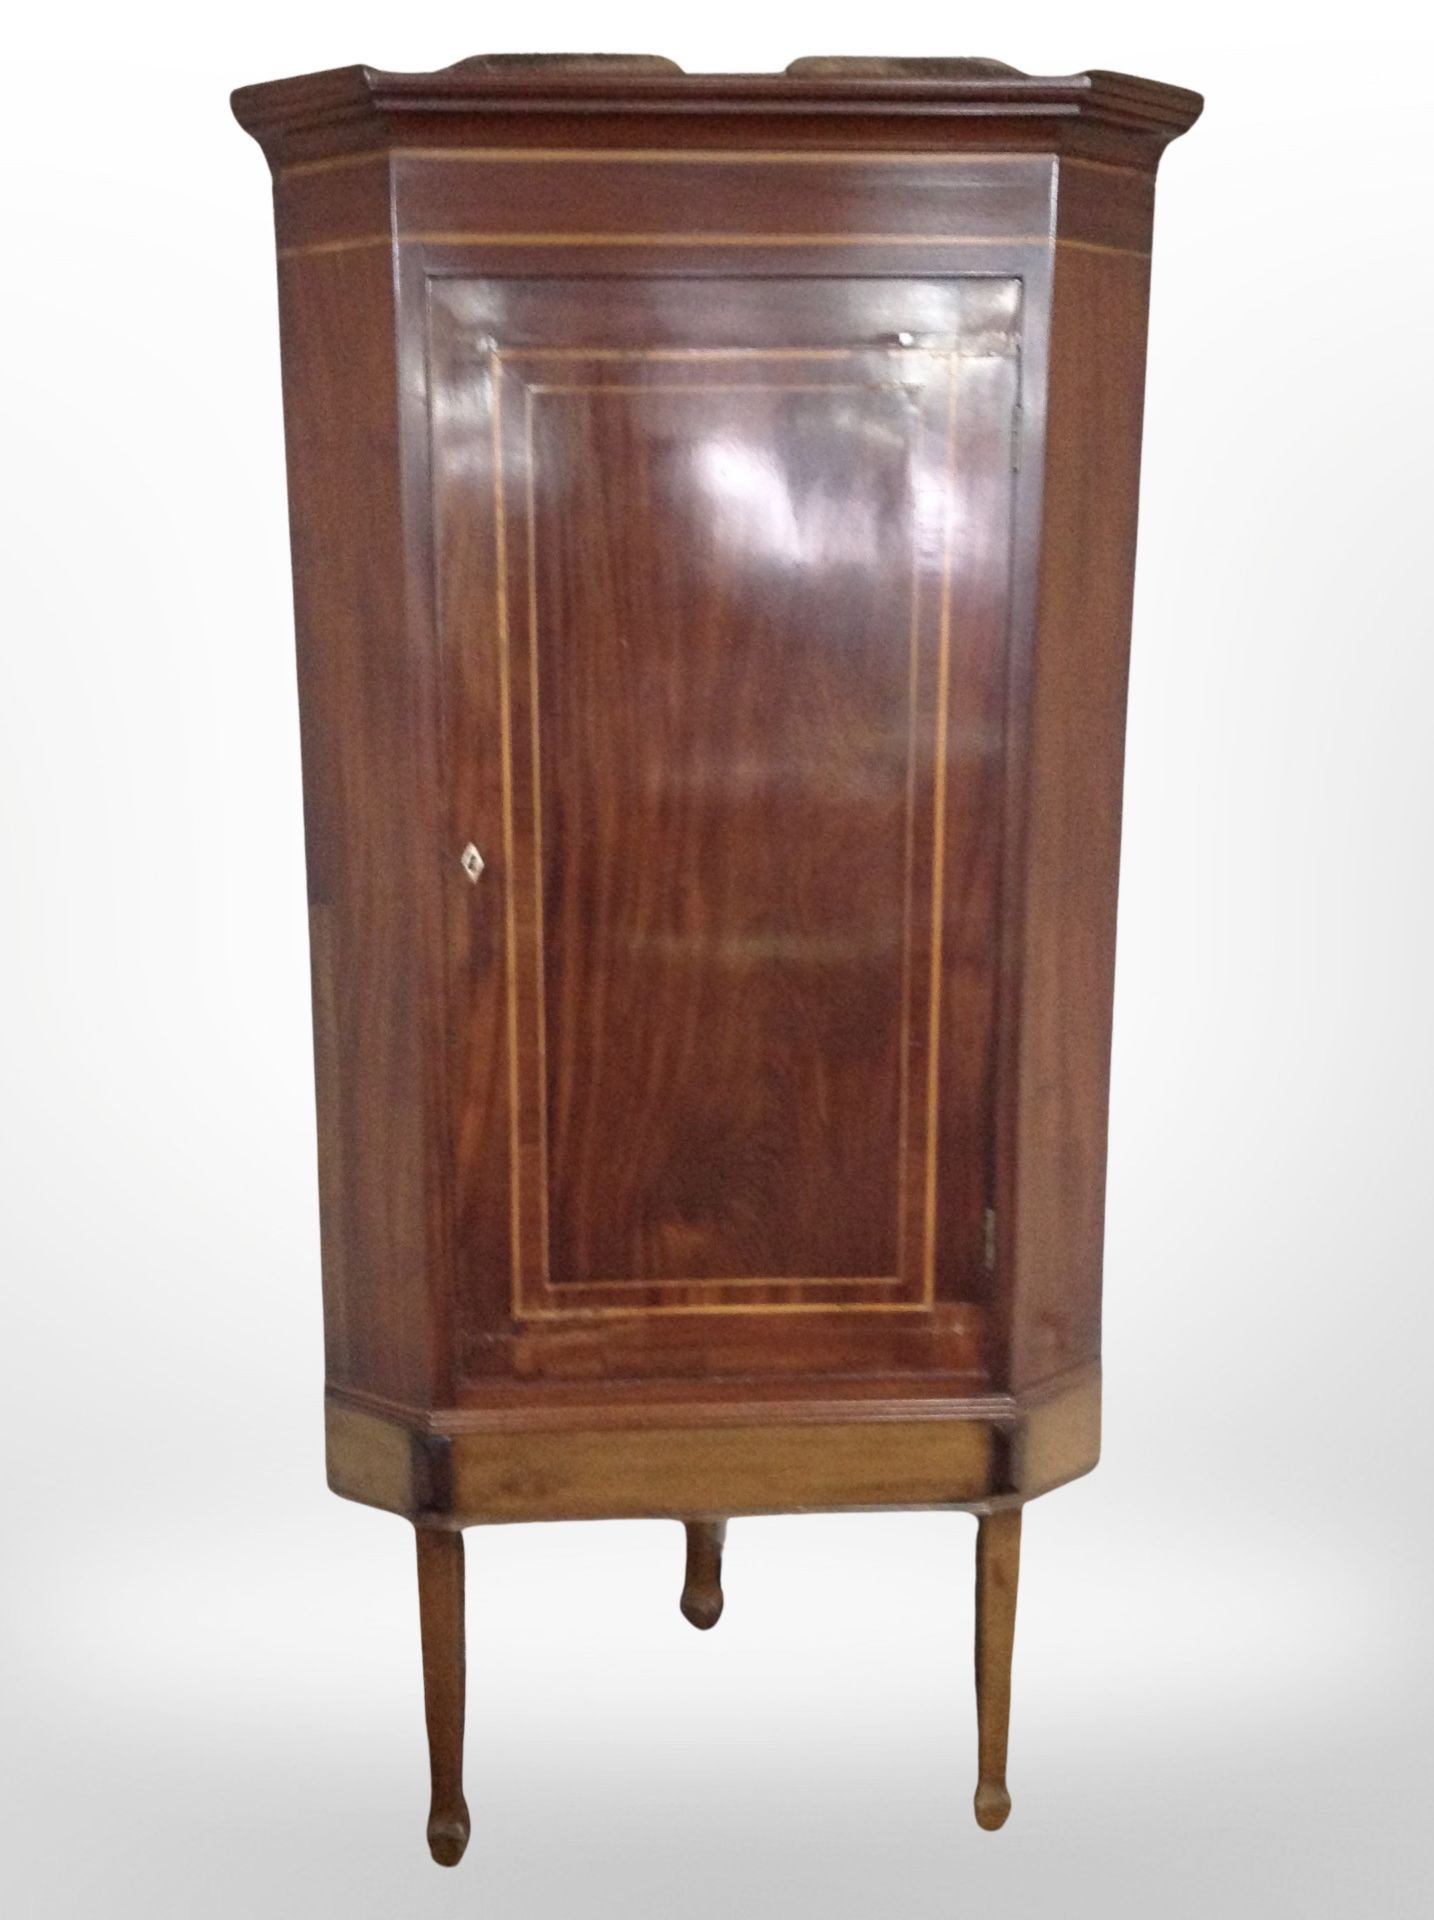 A George III mahogany and satin wood banded corner cabinet,